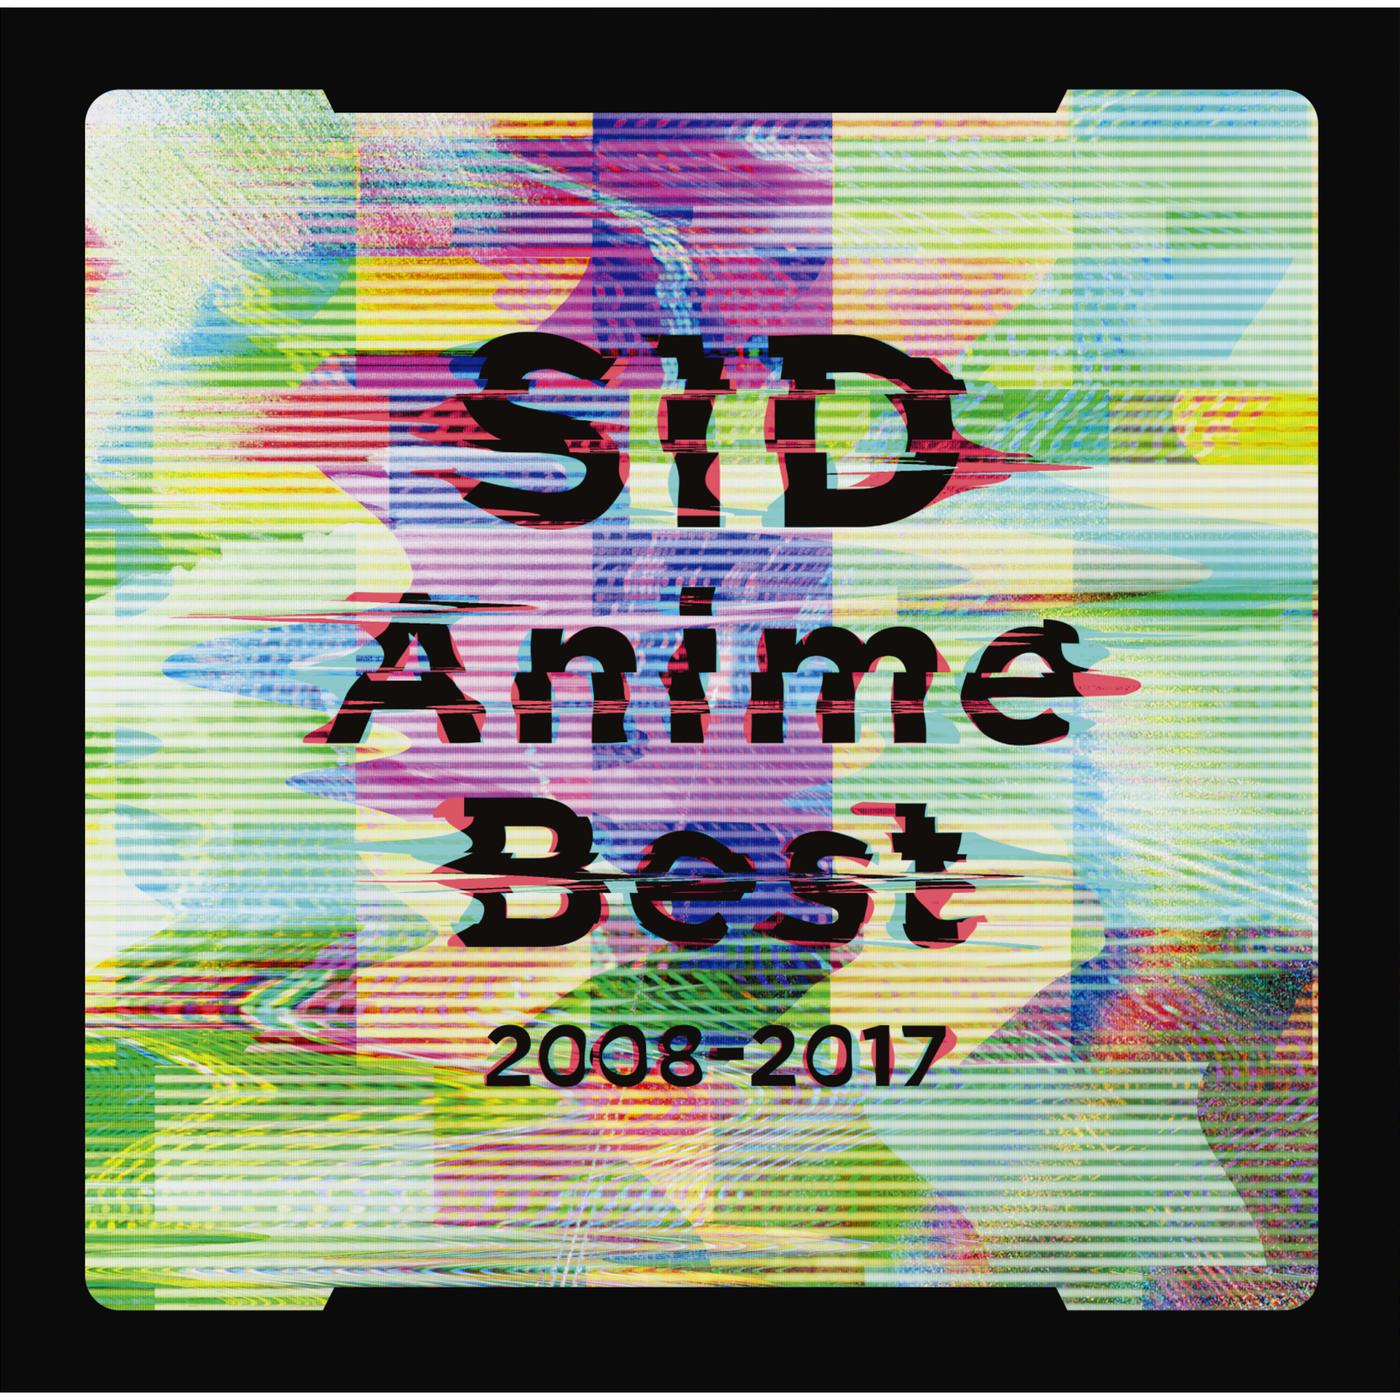 ENAMEL歌词 歌手シド-专辑SID Anime Best 2008-2017-单曲《ENAMEL》LRC歌词下载